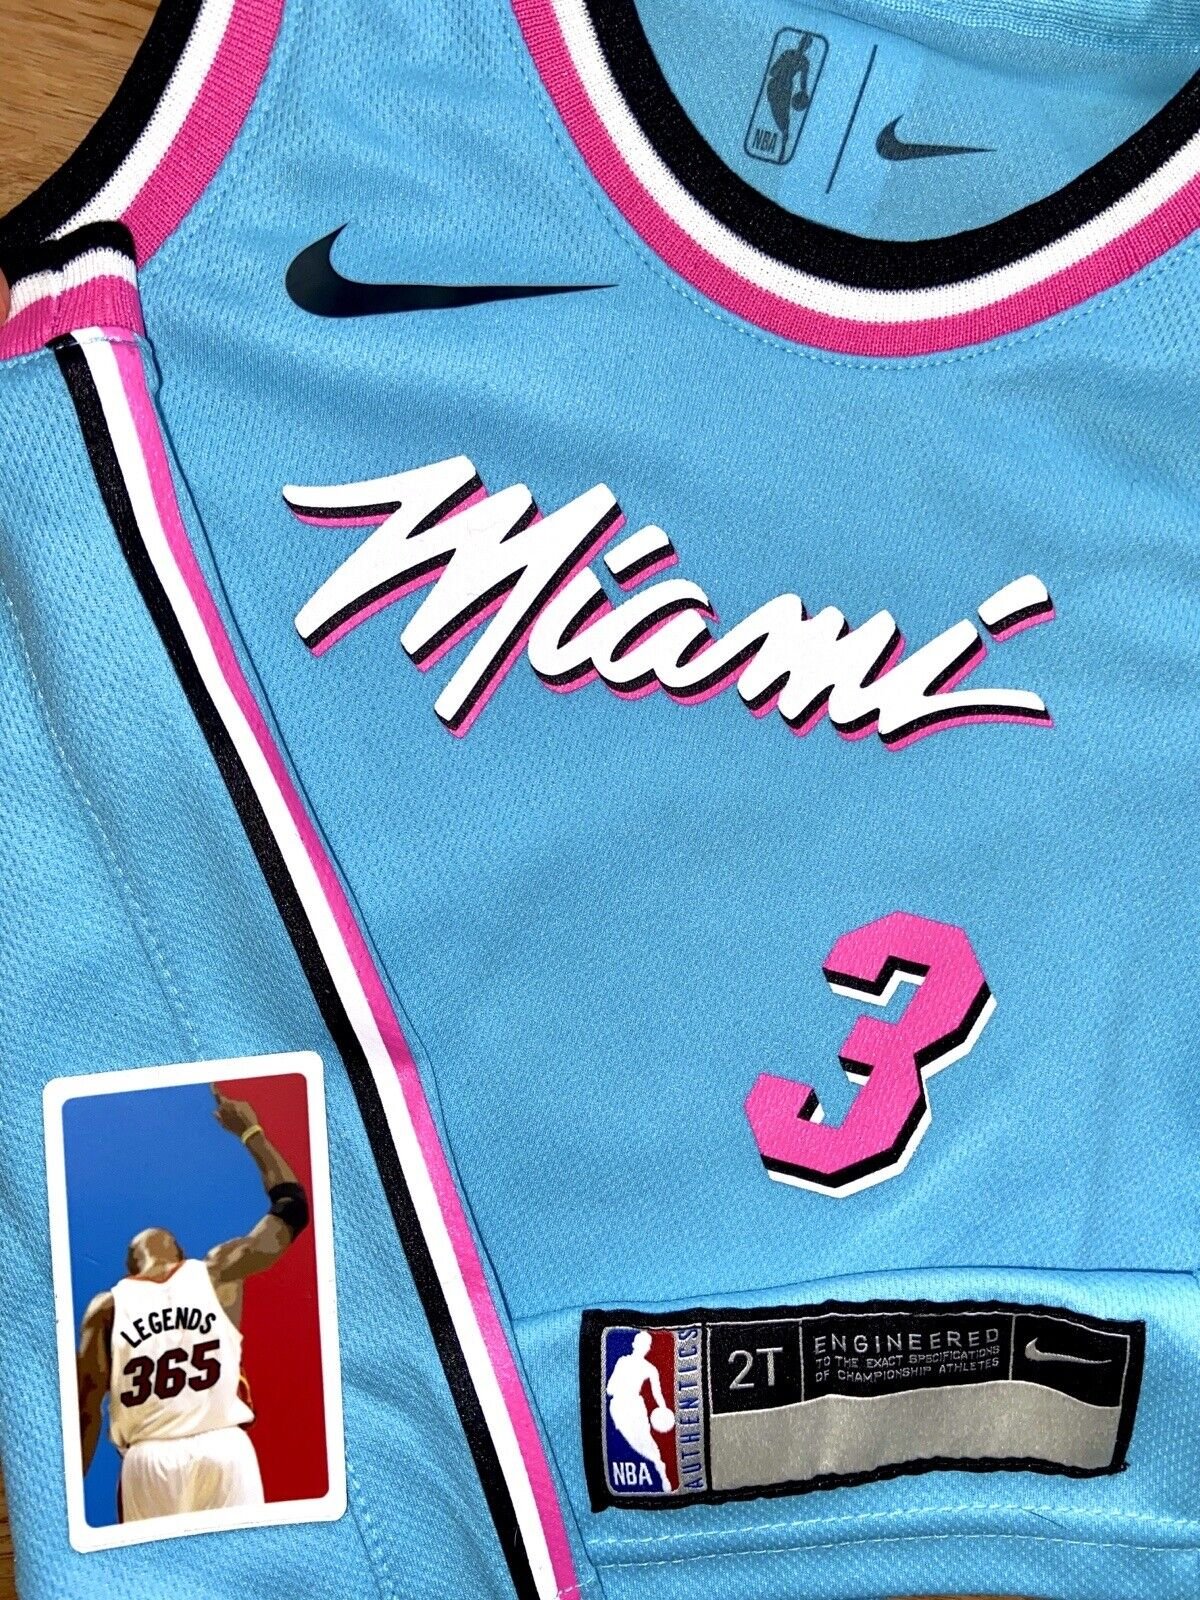 Nike NBA Miami Heat Dwayne Wade Vice City Edition Basketball